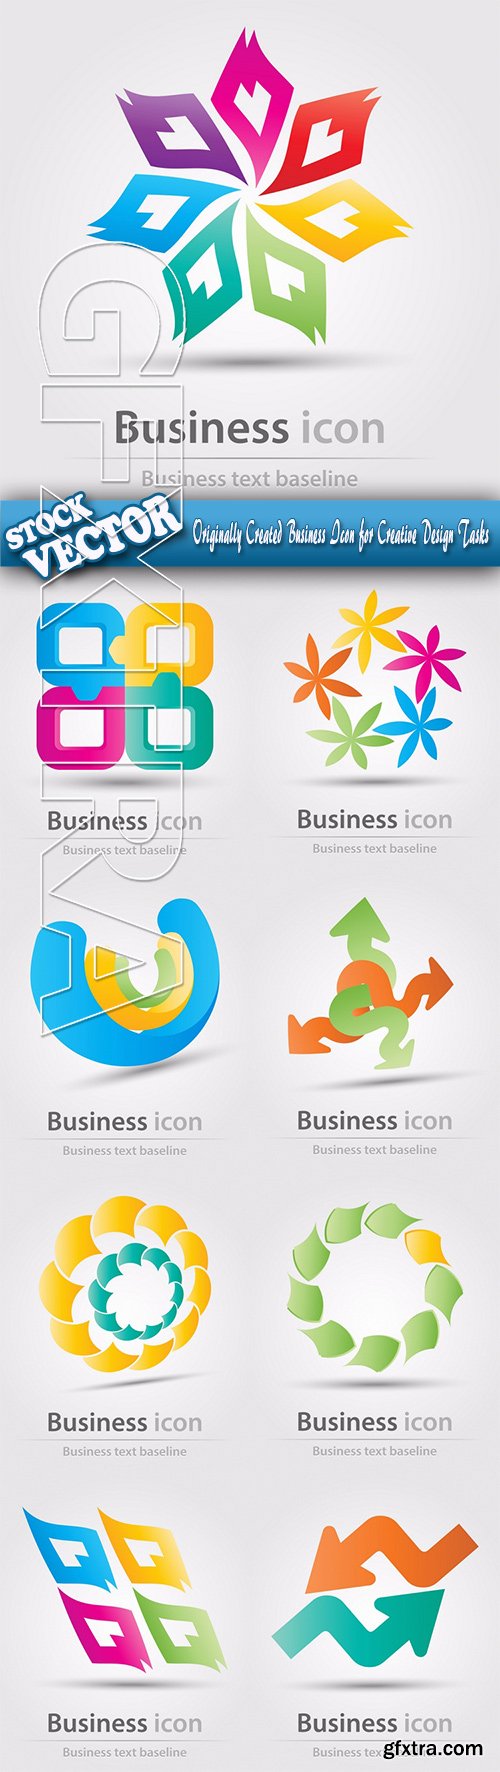 Stock Vector - Originally Created Business Icon for Creative Design Tasks